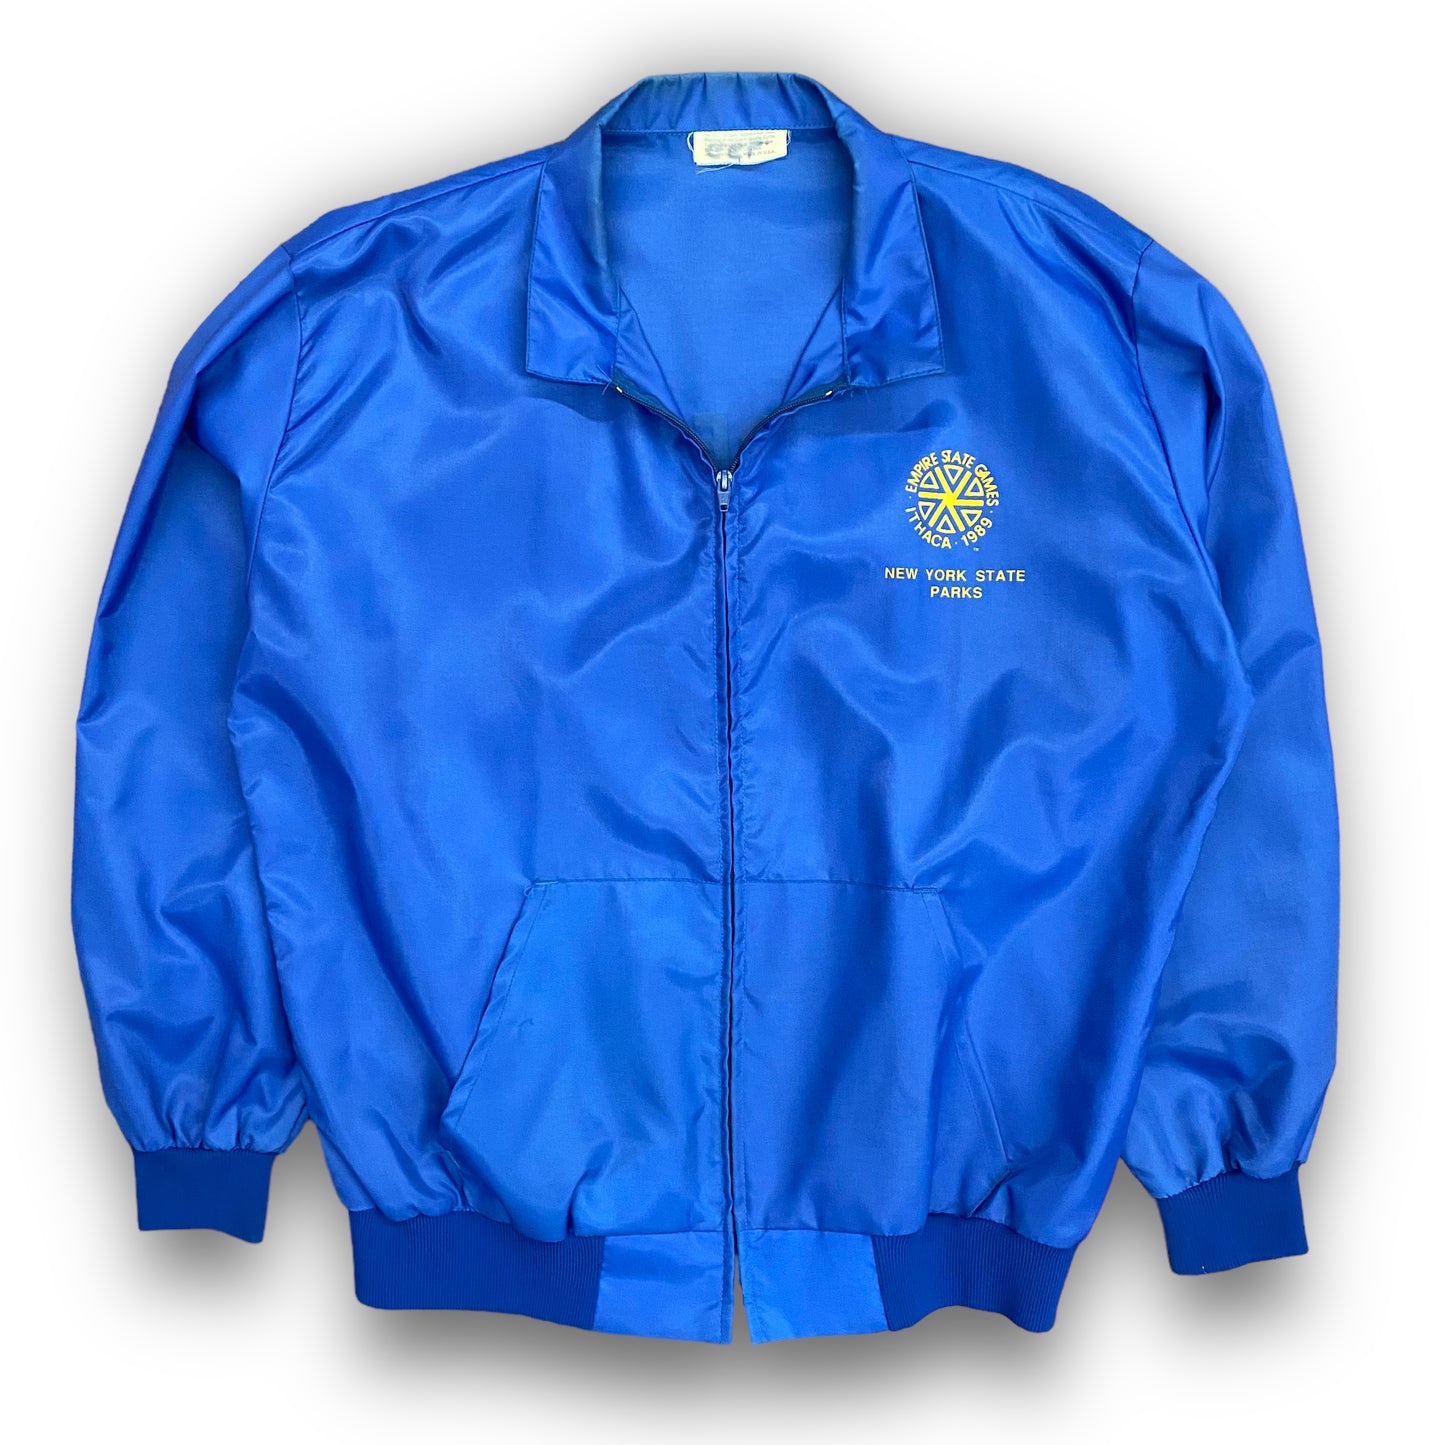 Vintage 1989 Empire State Games: Ithaca Blue Windbreaker Jacket - Size XL